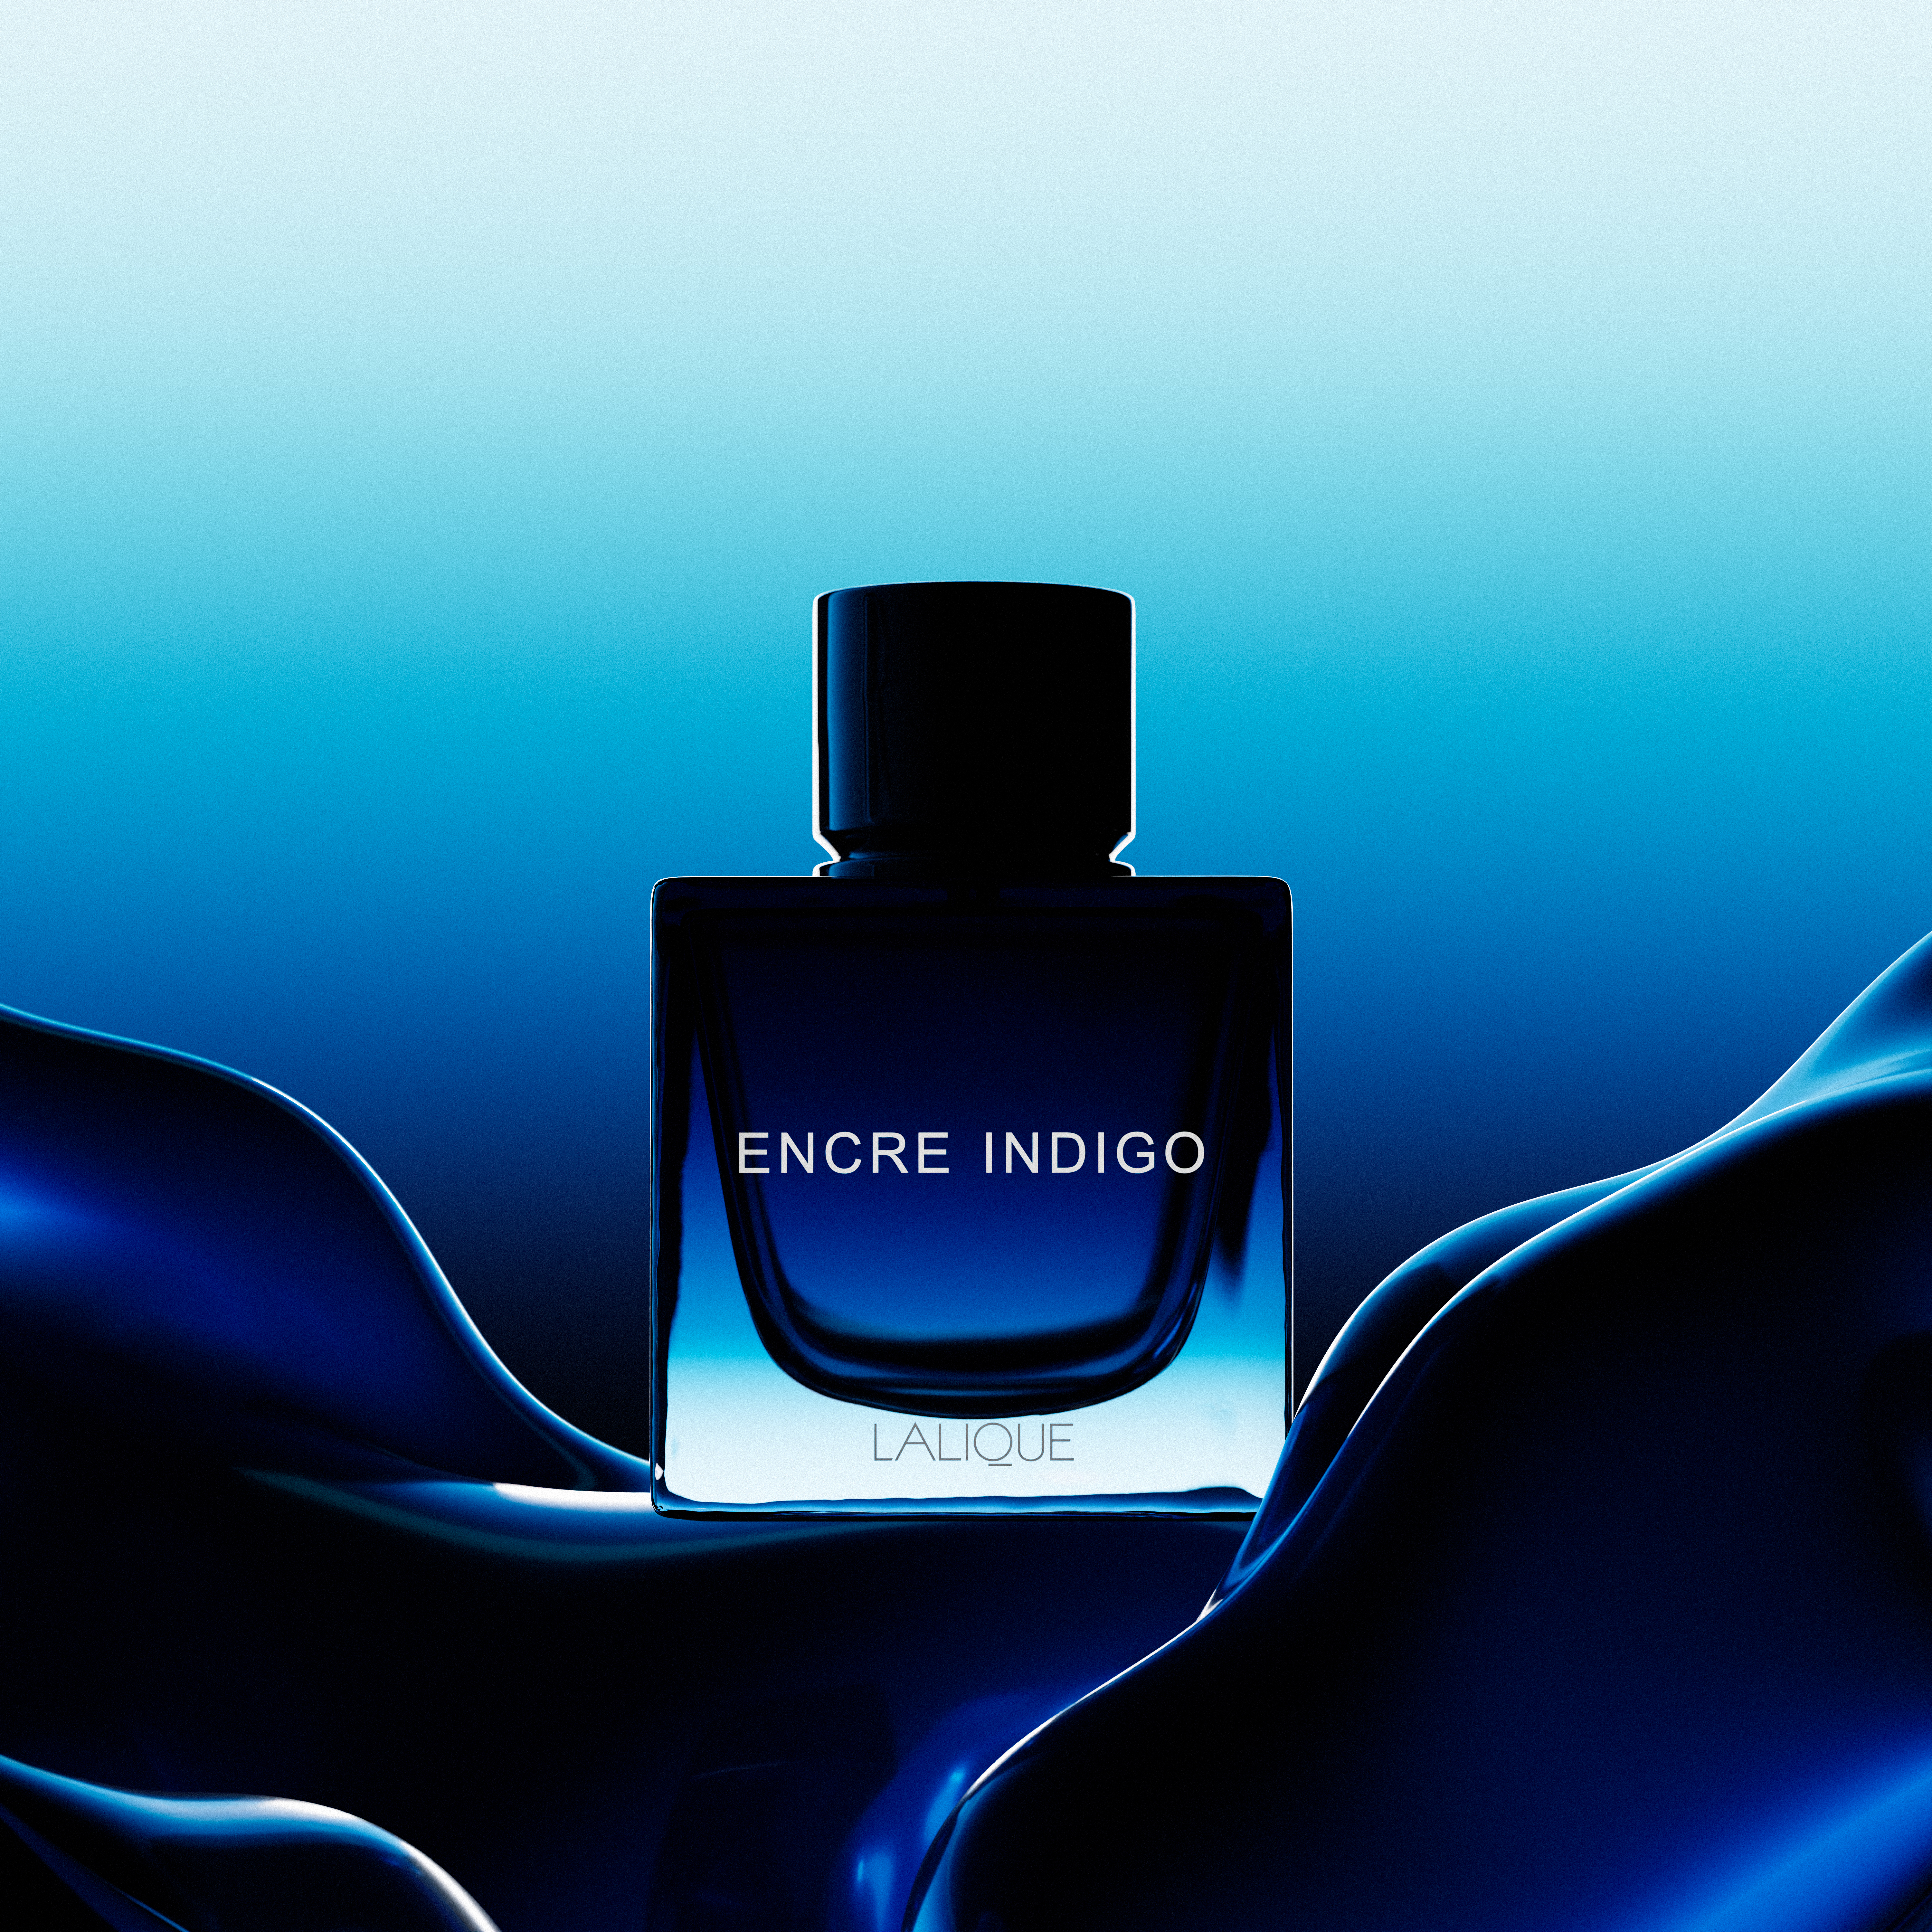 Encre Indigo by Lalique » Reviews & Perfume Facts